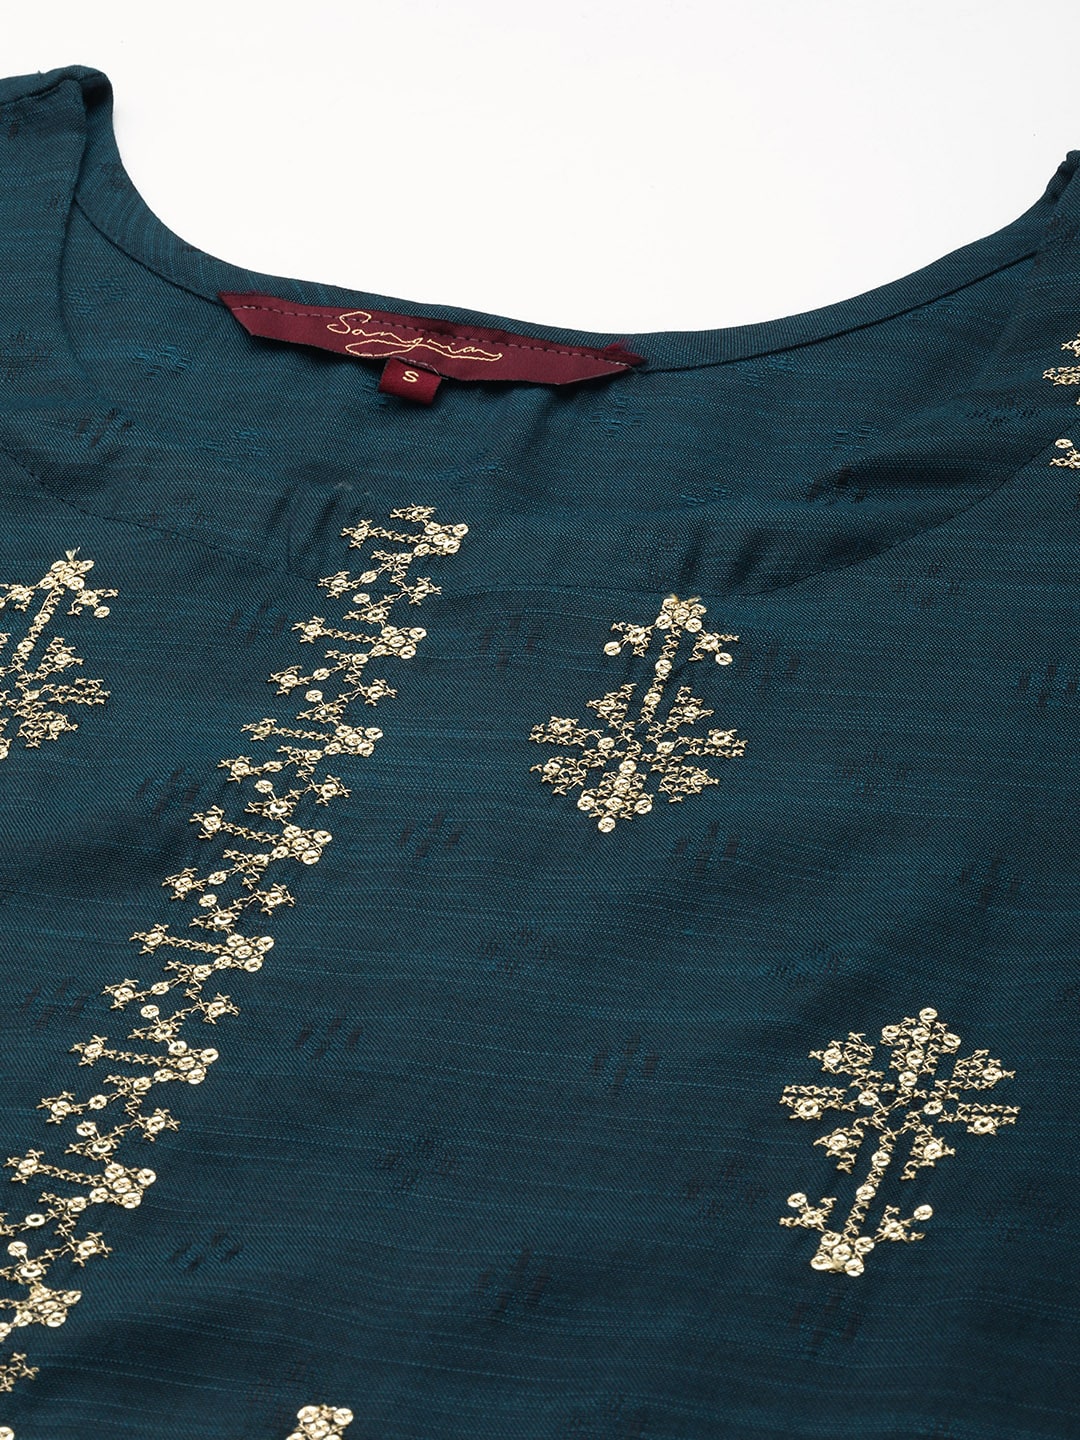 Shop Embroidered Handloom Cotton Kurta 3733 Online - Women Plus